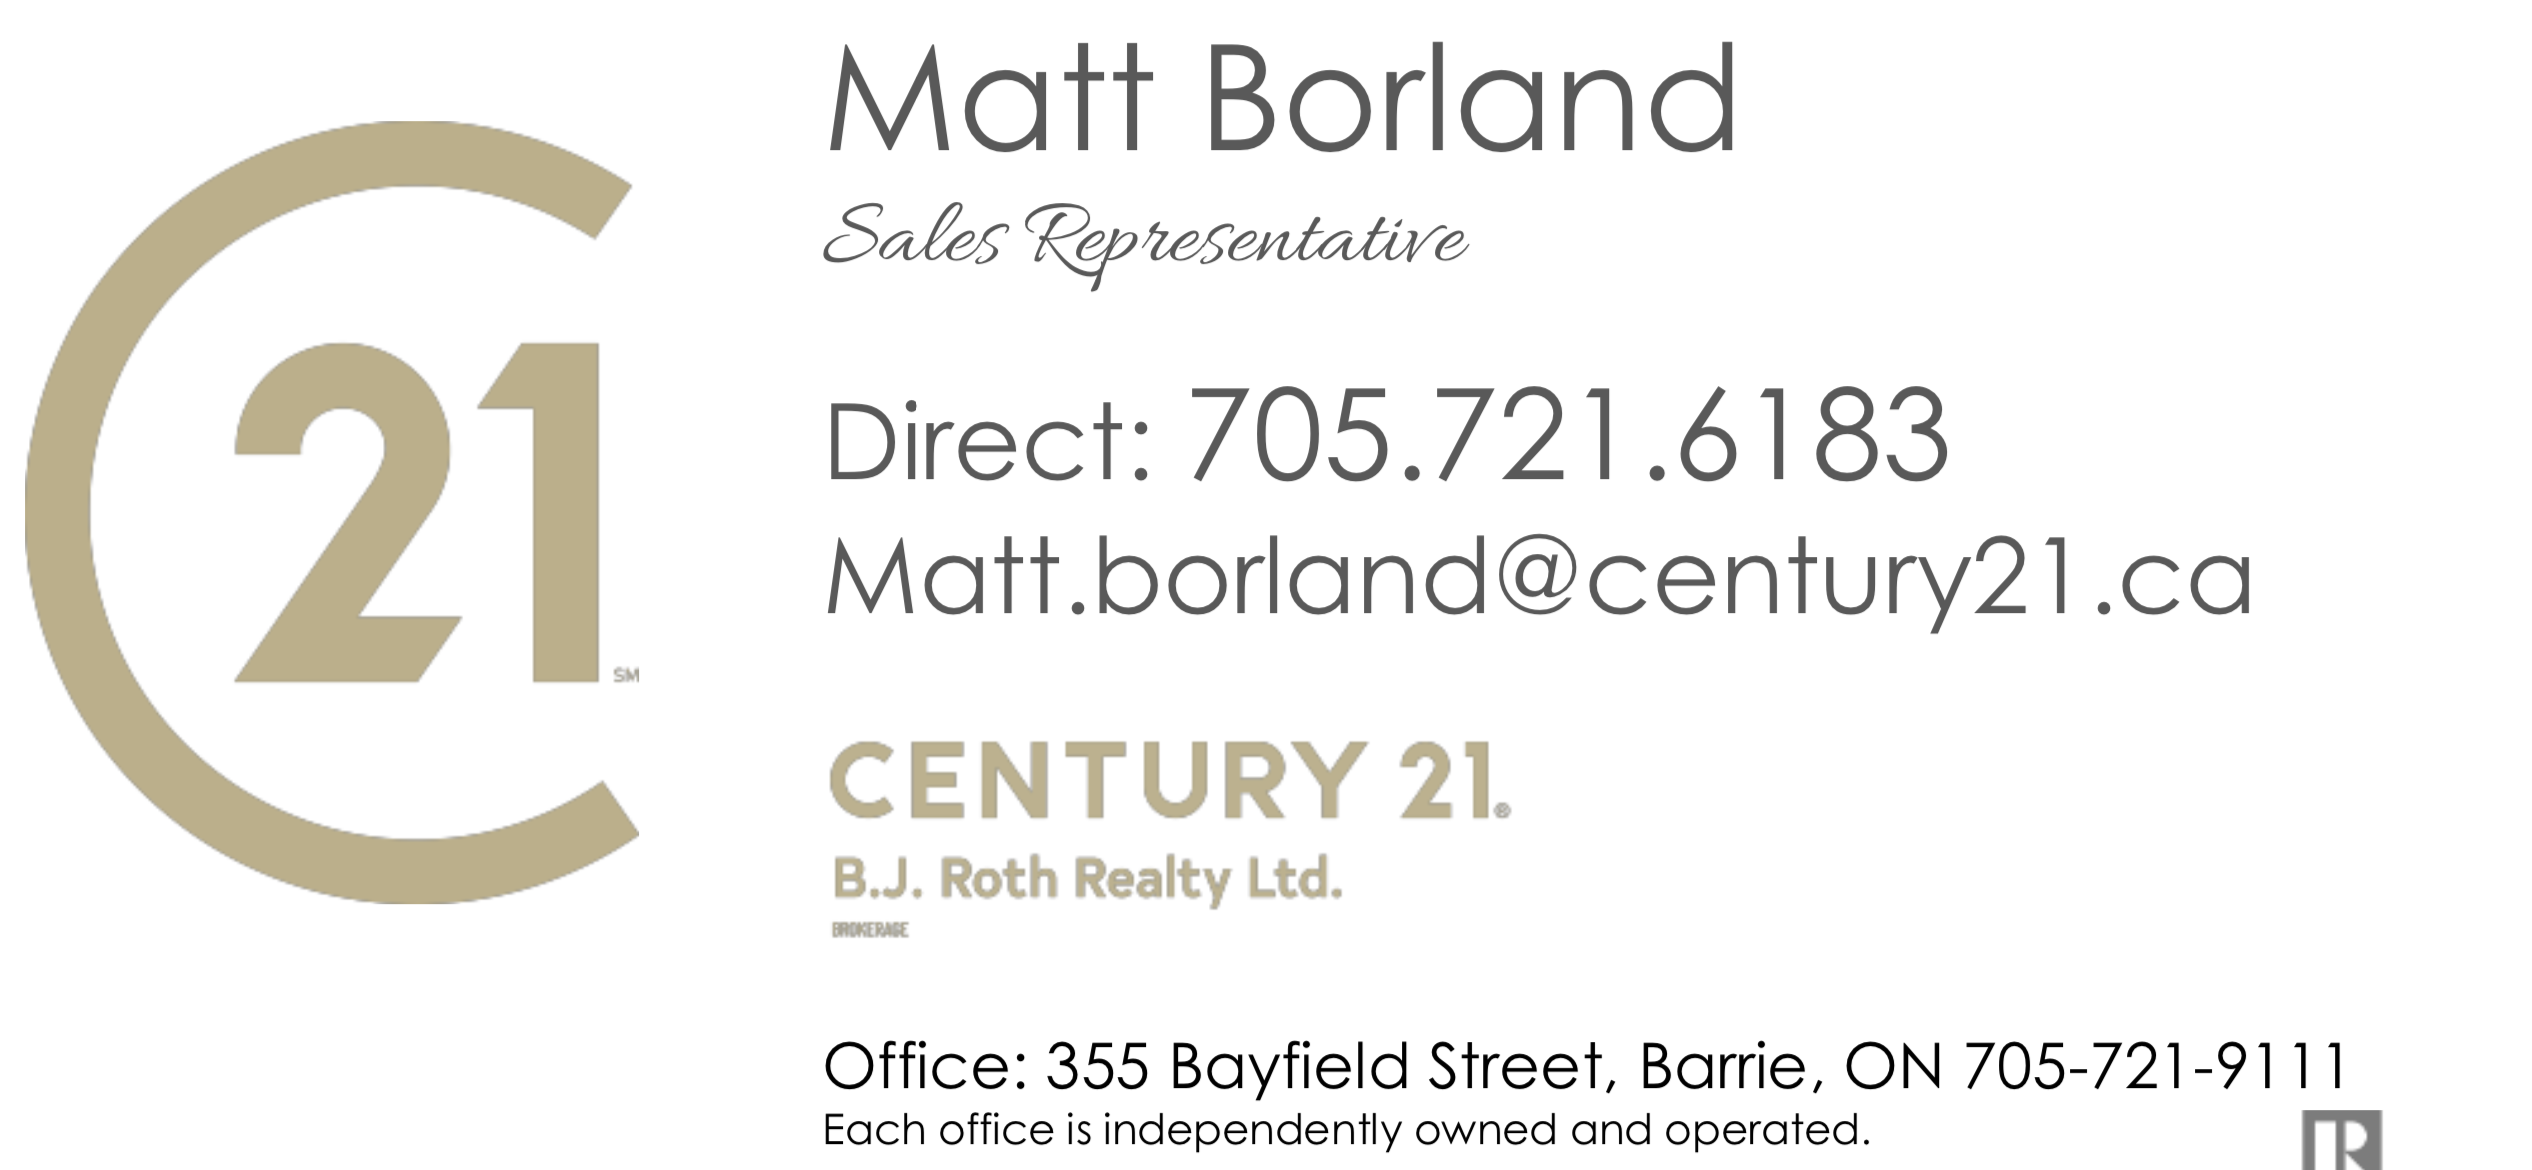 Matt Borland, Century 21 Sales Representative